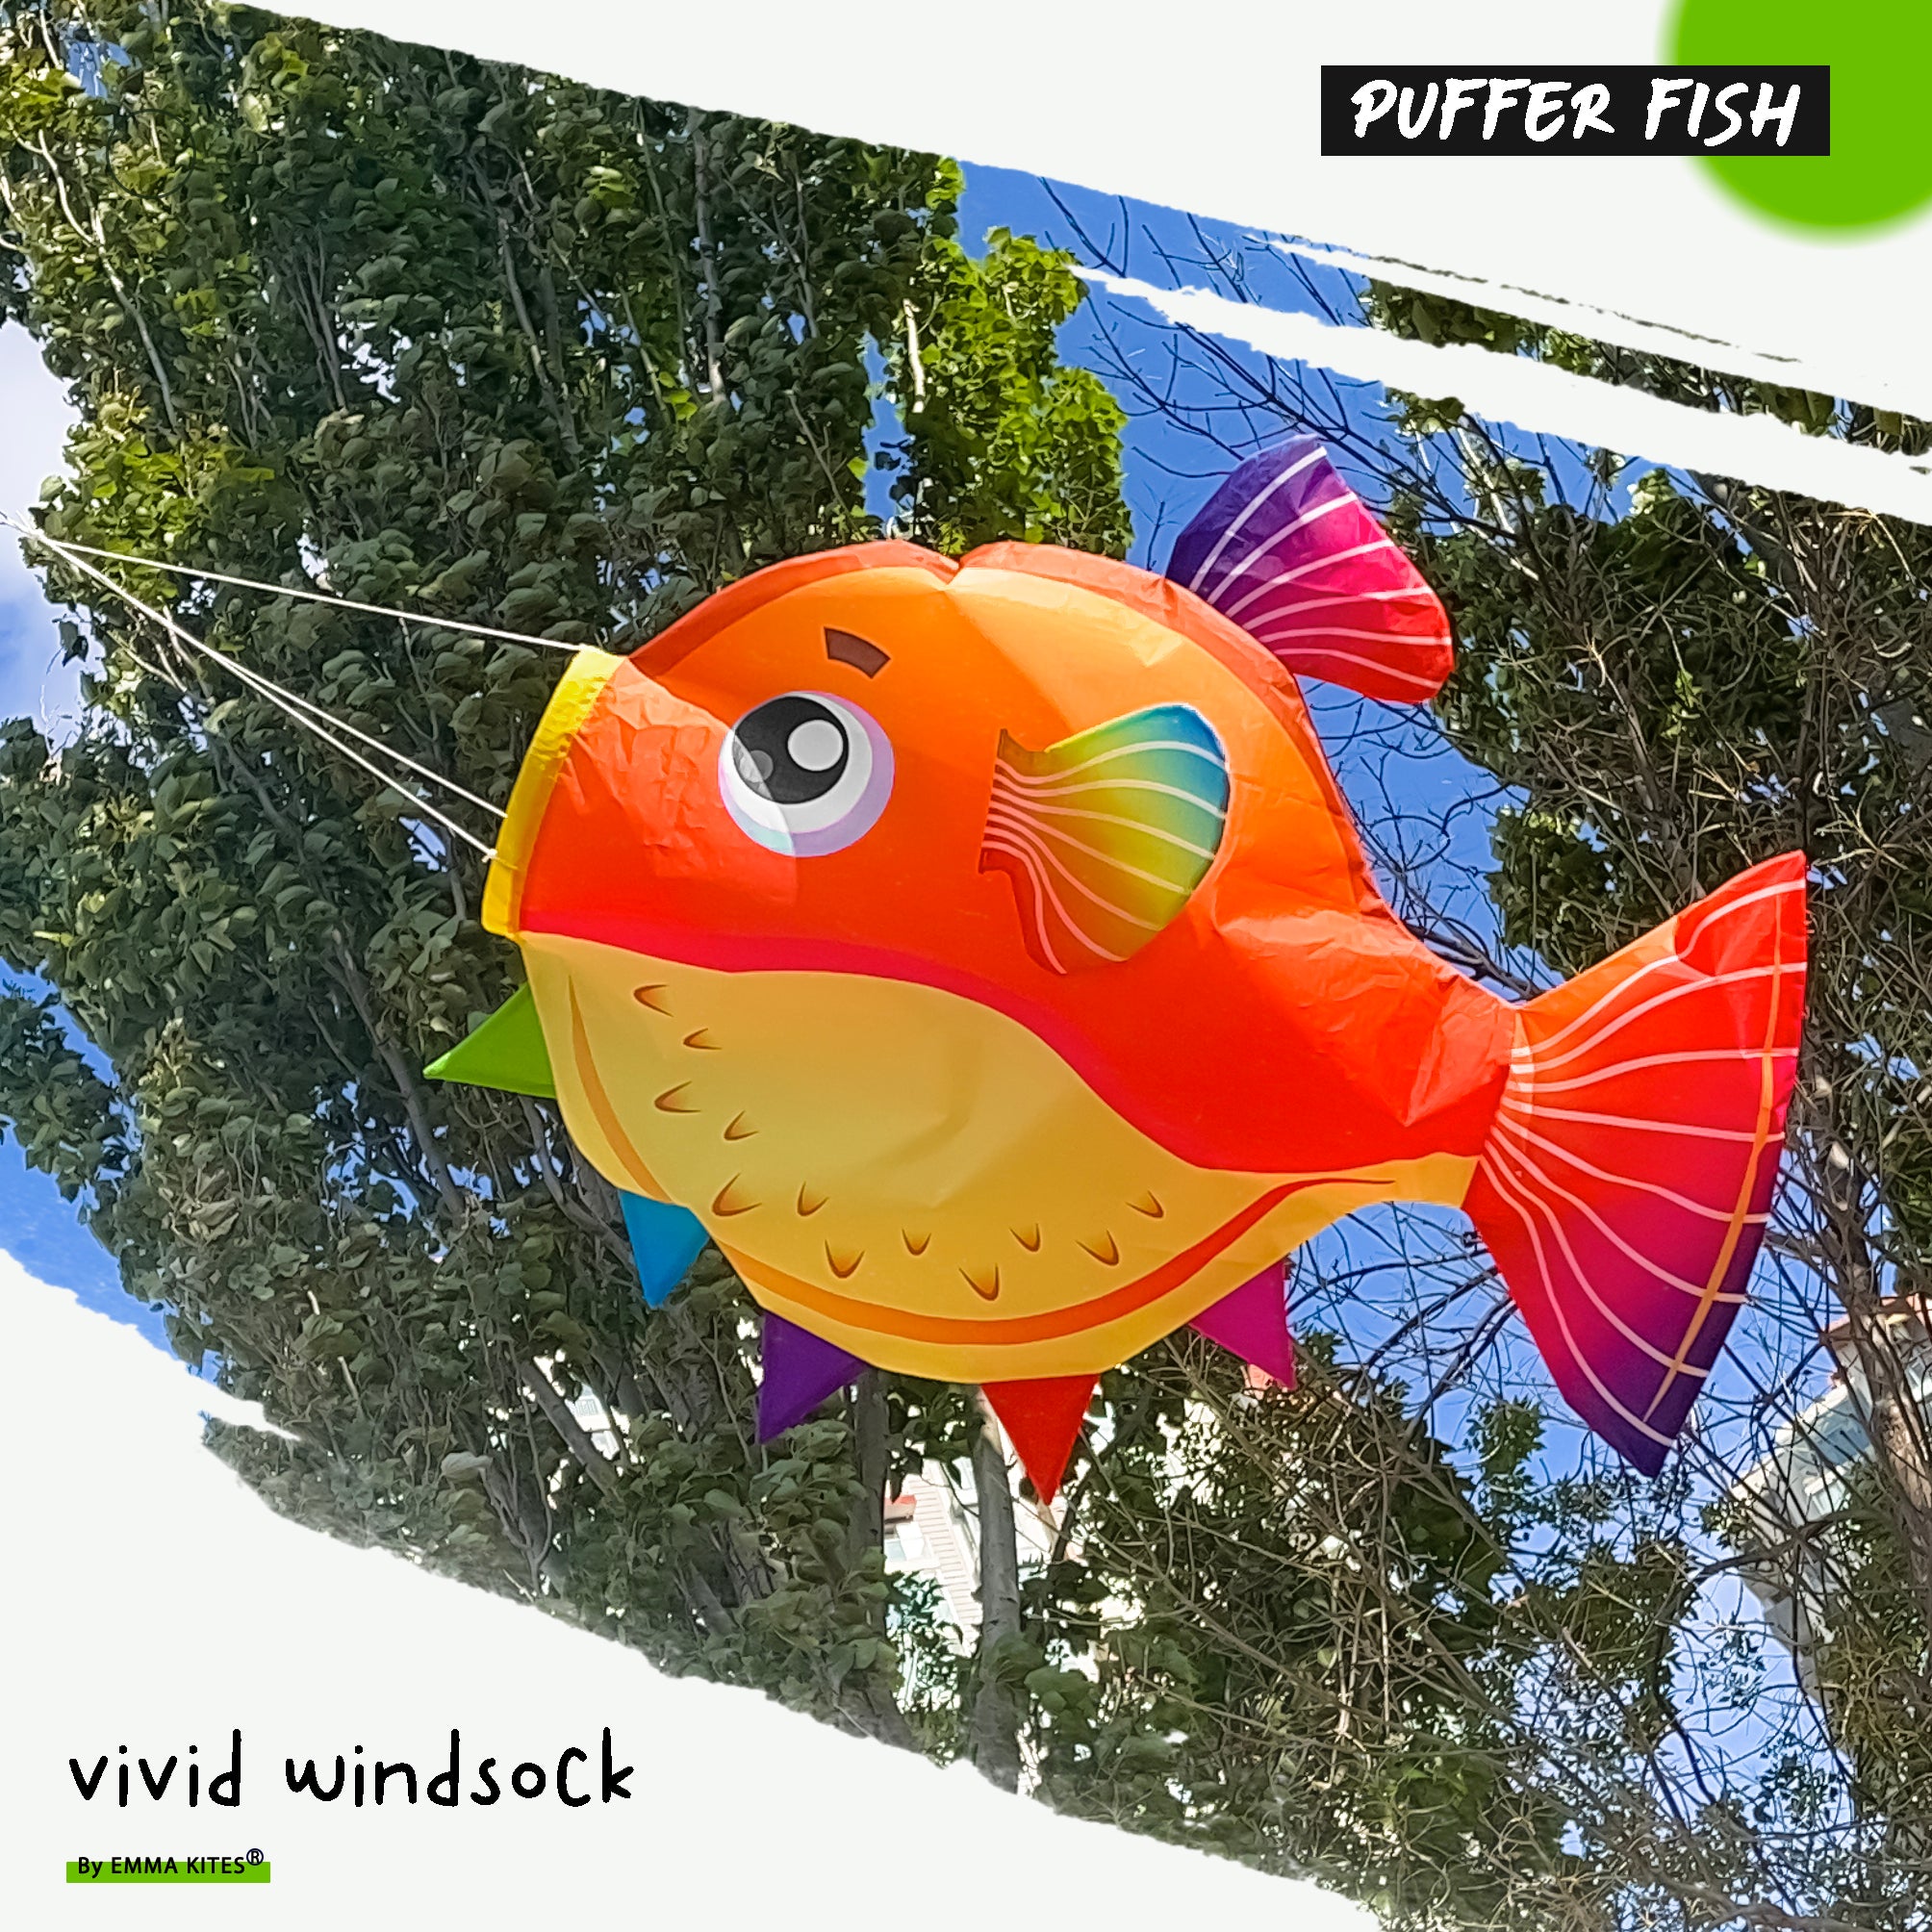 29 inch Puffer Fish Windsock